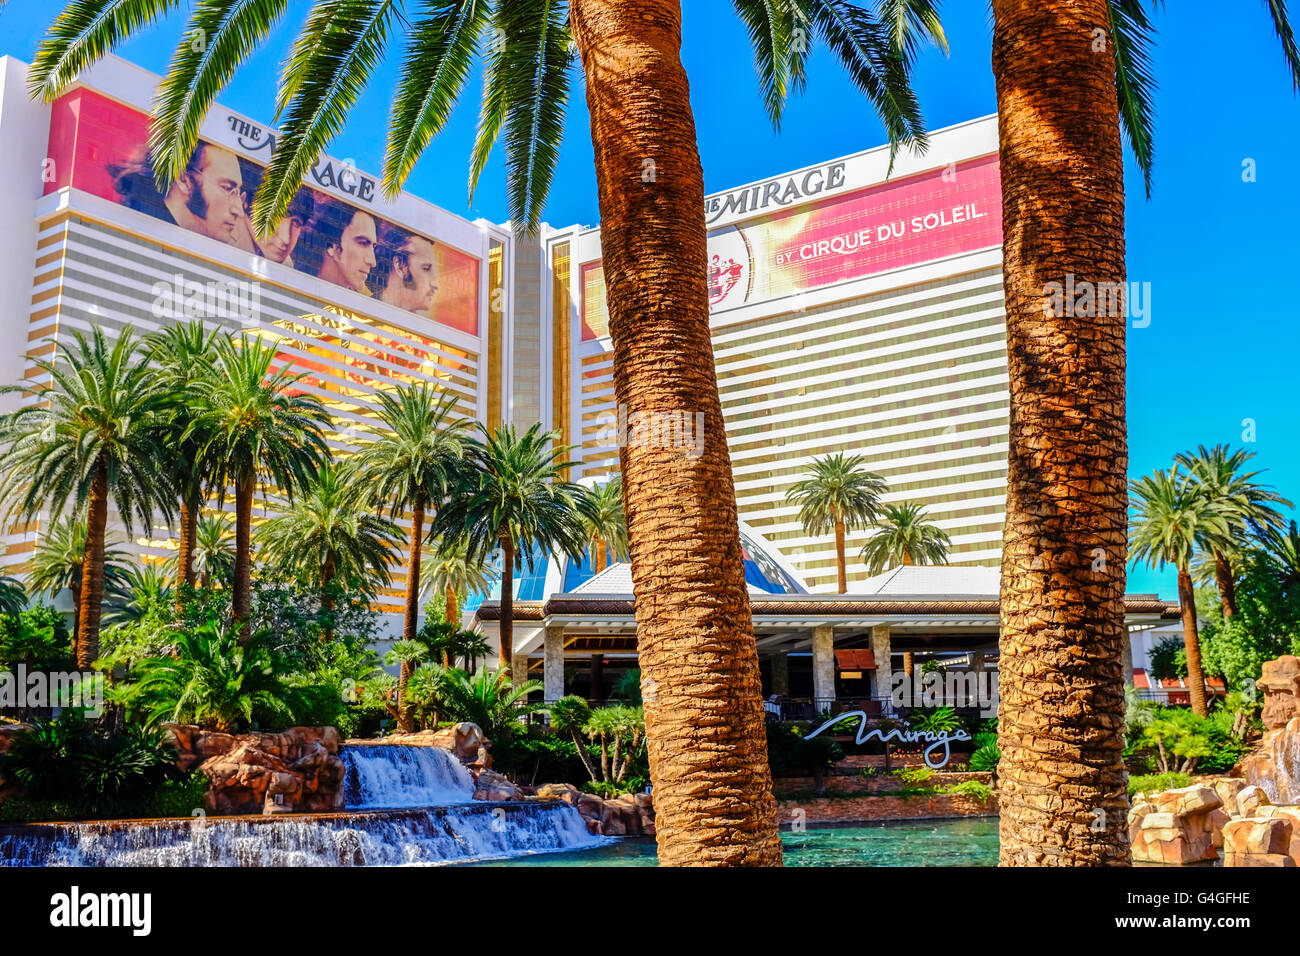 Le Mirage Hotel and Casino, Las Vegas Banque D'Images